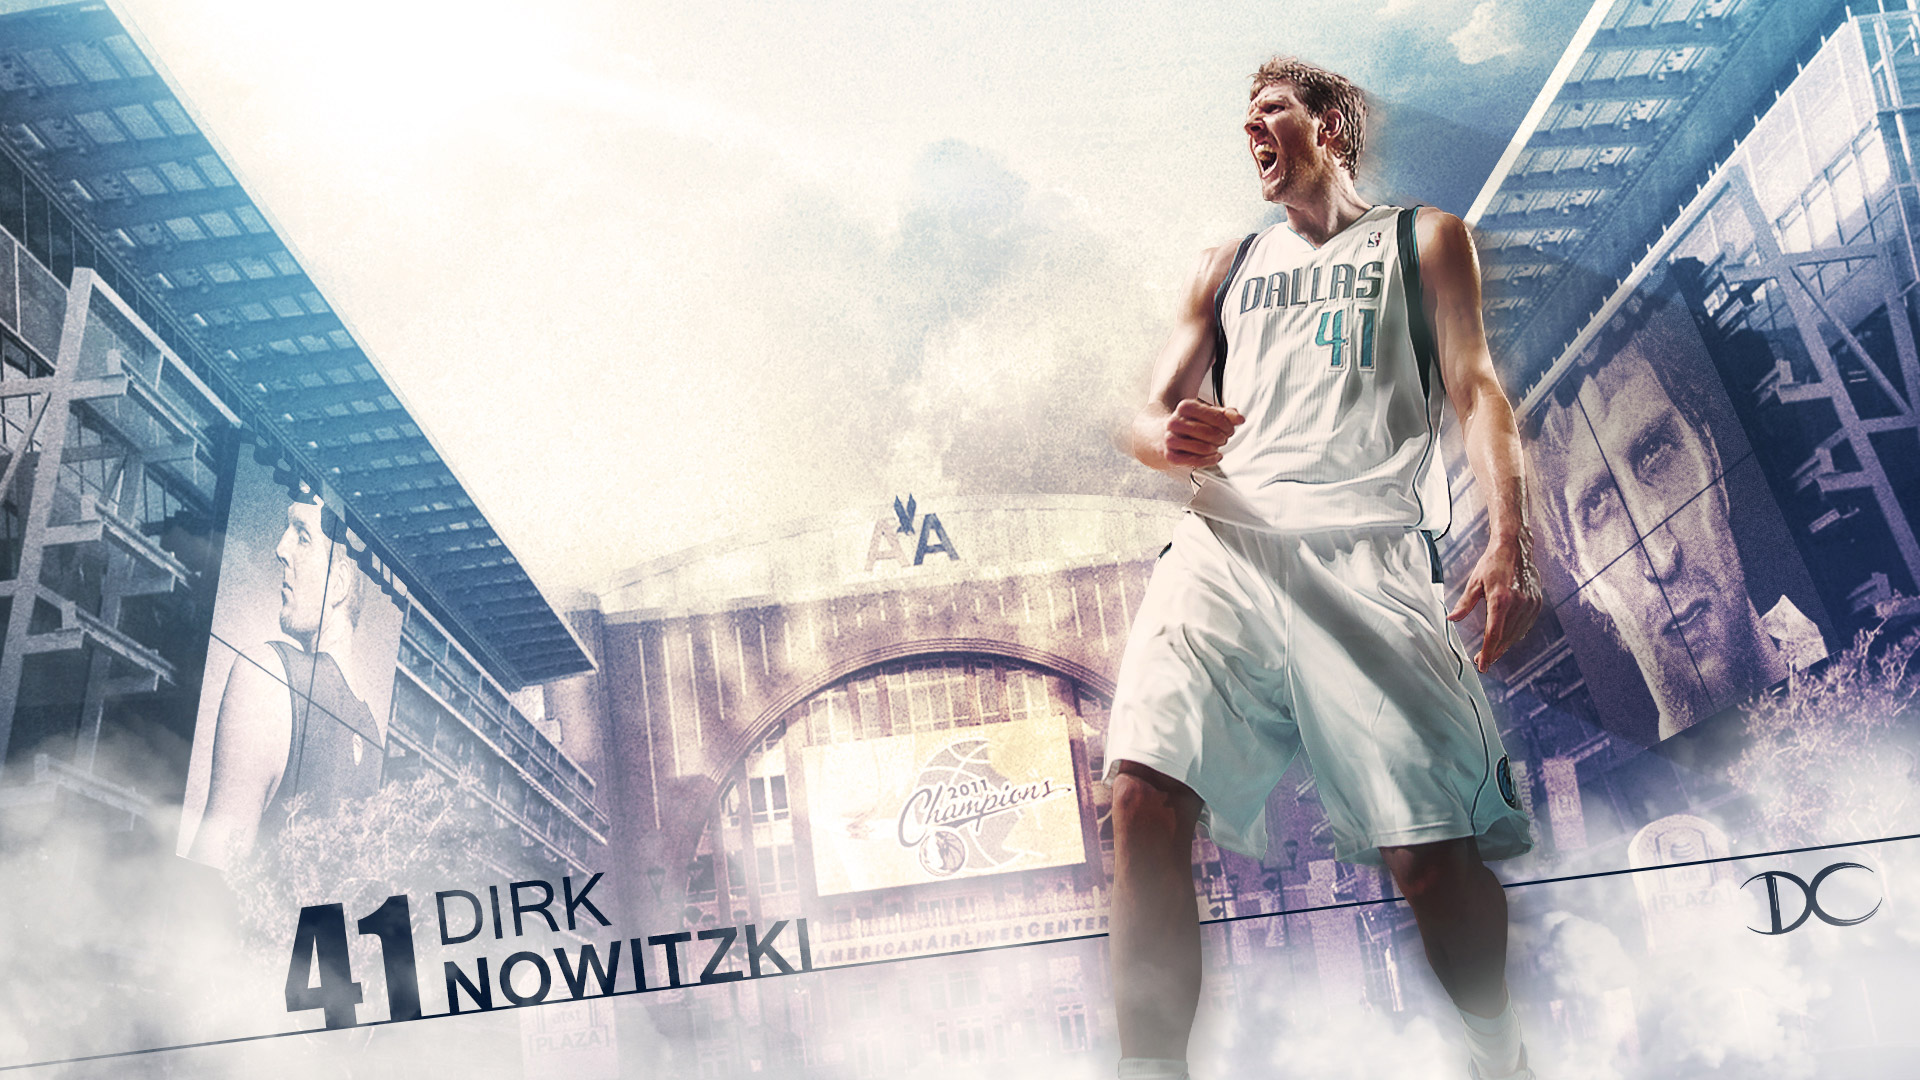 Dirk Nowitzki Legacy 2014 Wallpaper | Basketball Wallpapers at BasketWallpapers.com